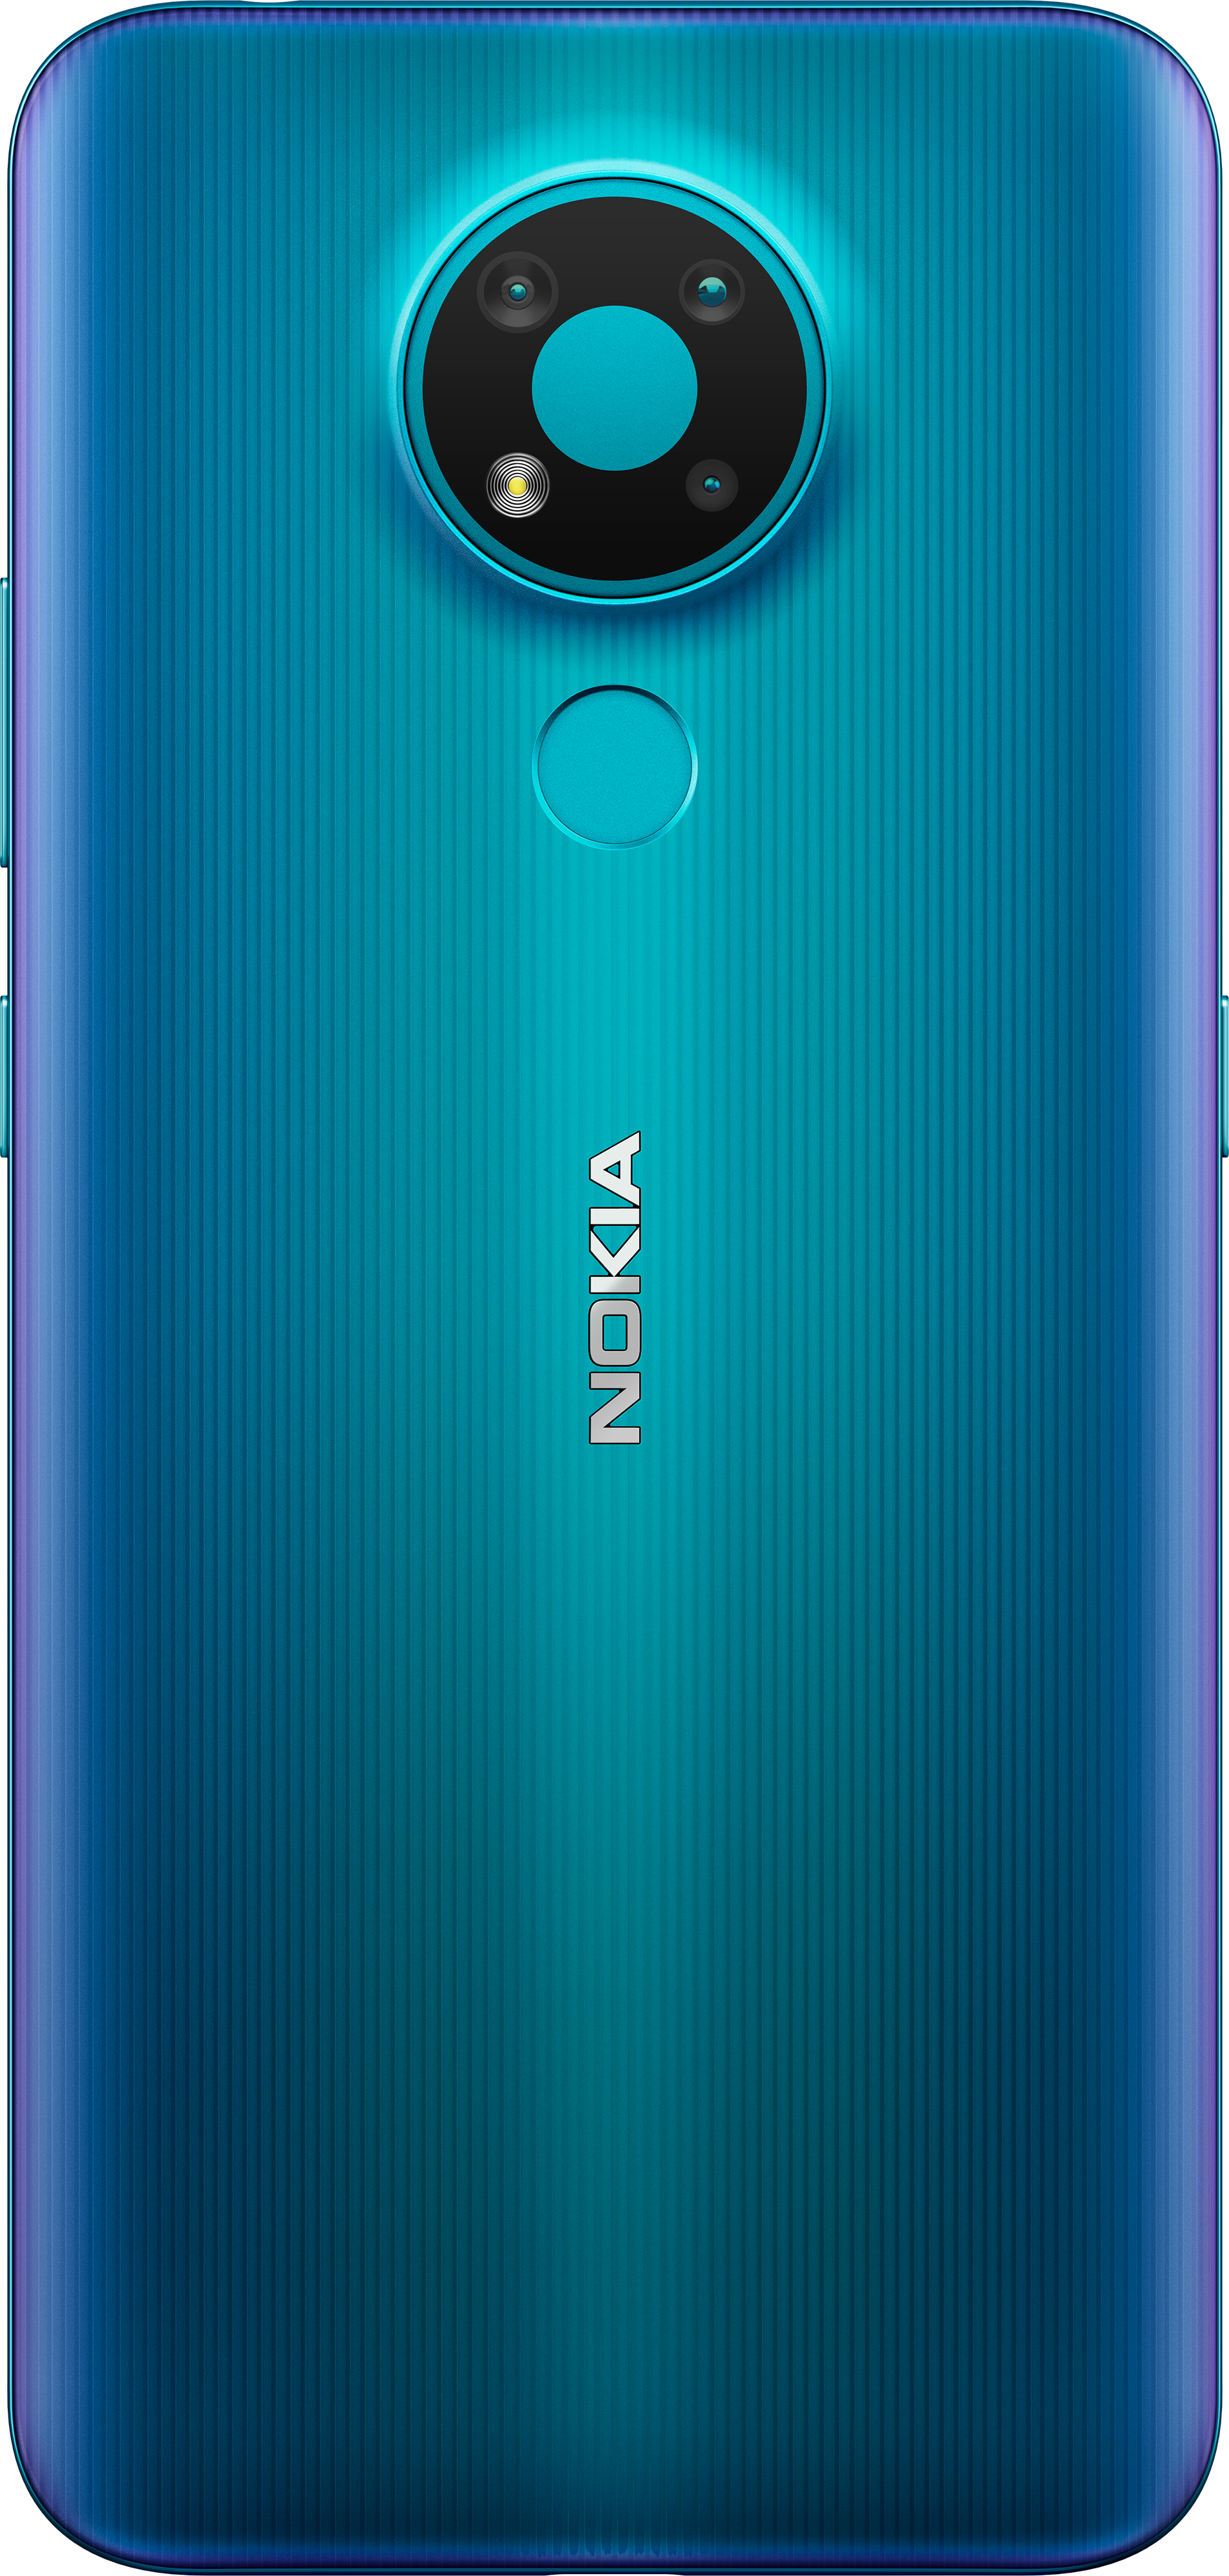 2021 nokia android Nokia's revamped